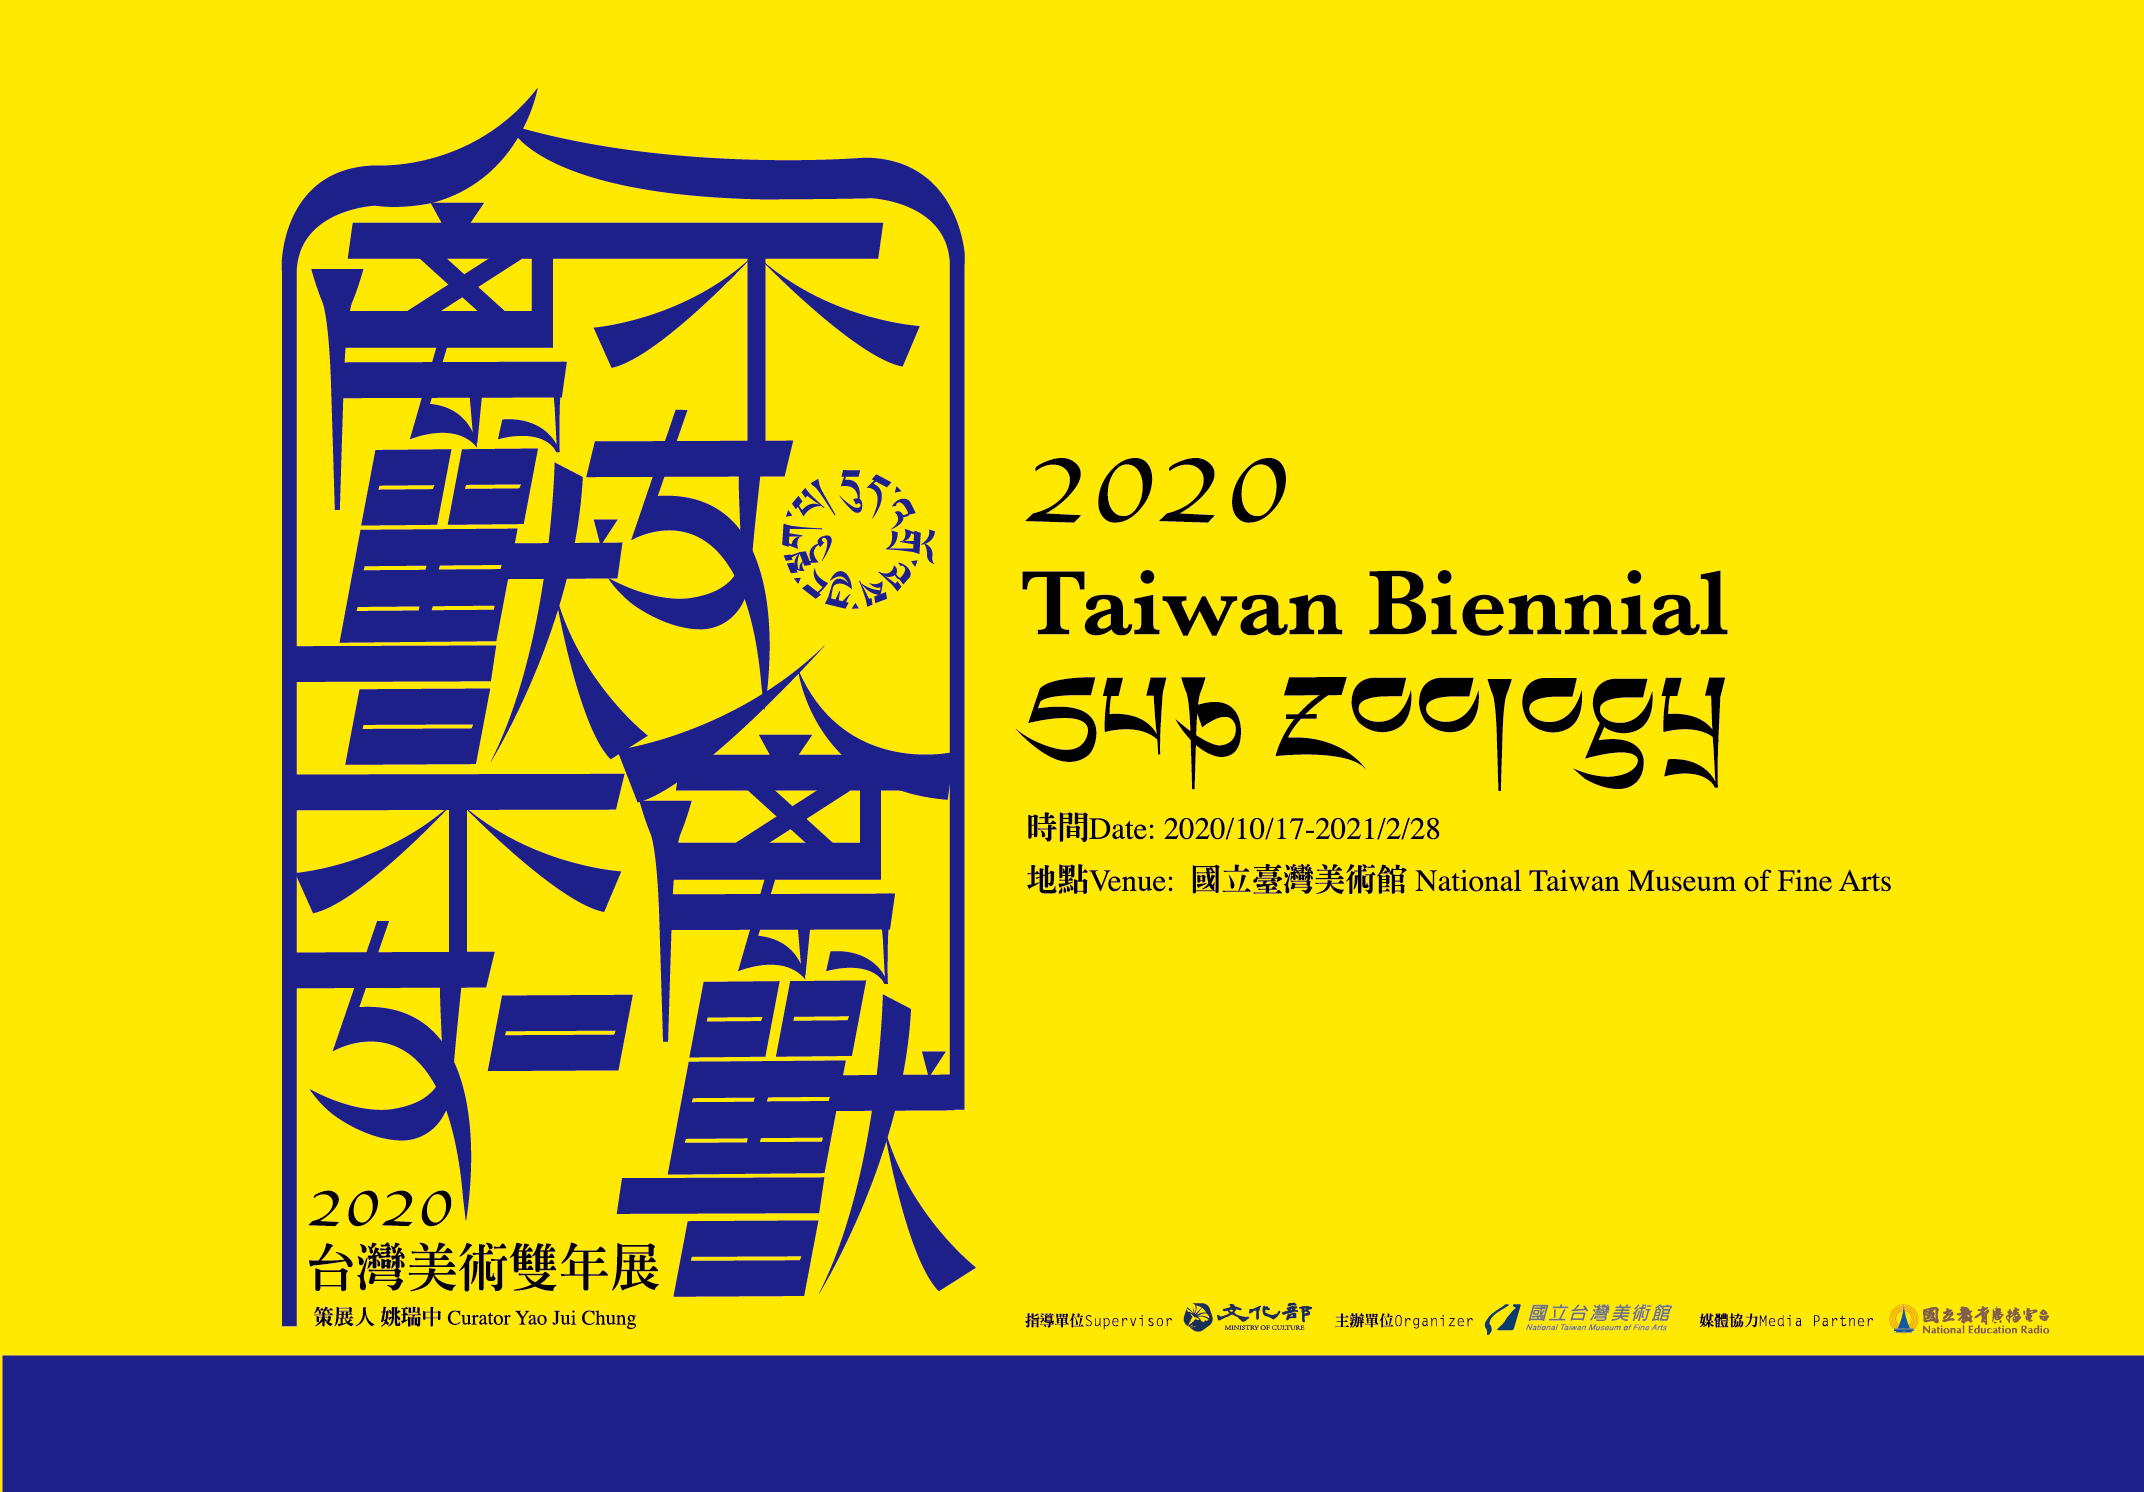 2020 Taiwan Biennial 'Subzoology' adopts human-animal relationship as main theme